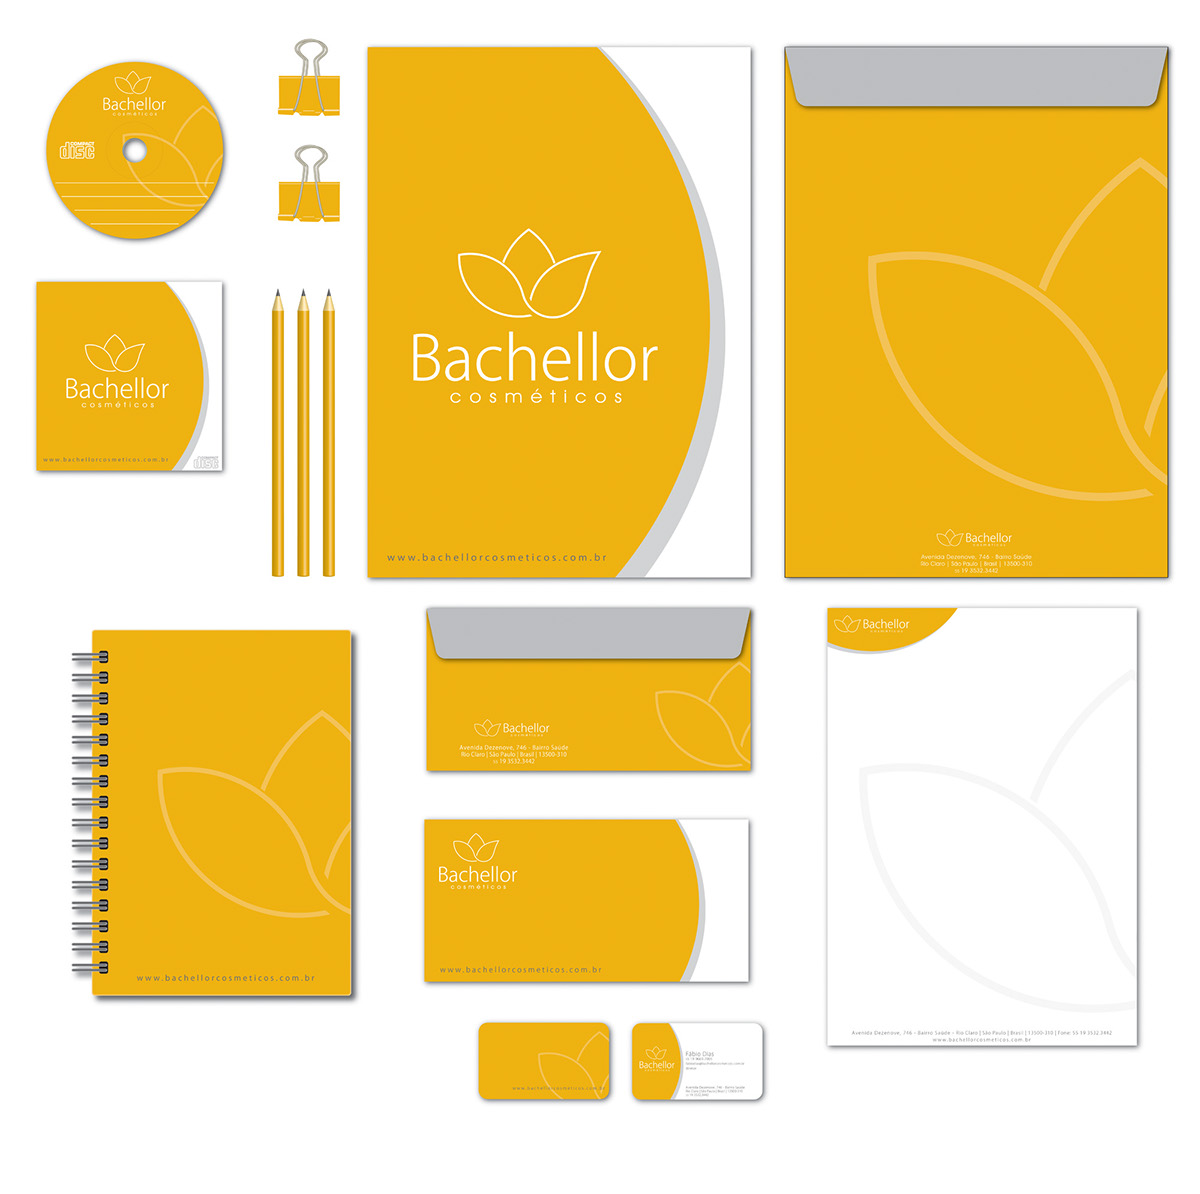 Bachellor Cosméticos  cosmetics brand identity marca identidade visual manual ID papelaria Stationery